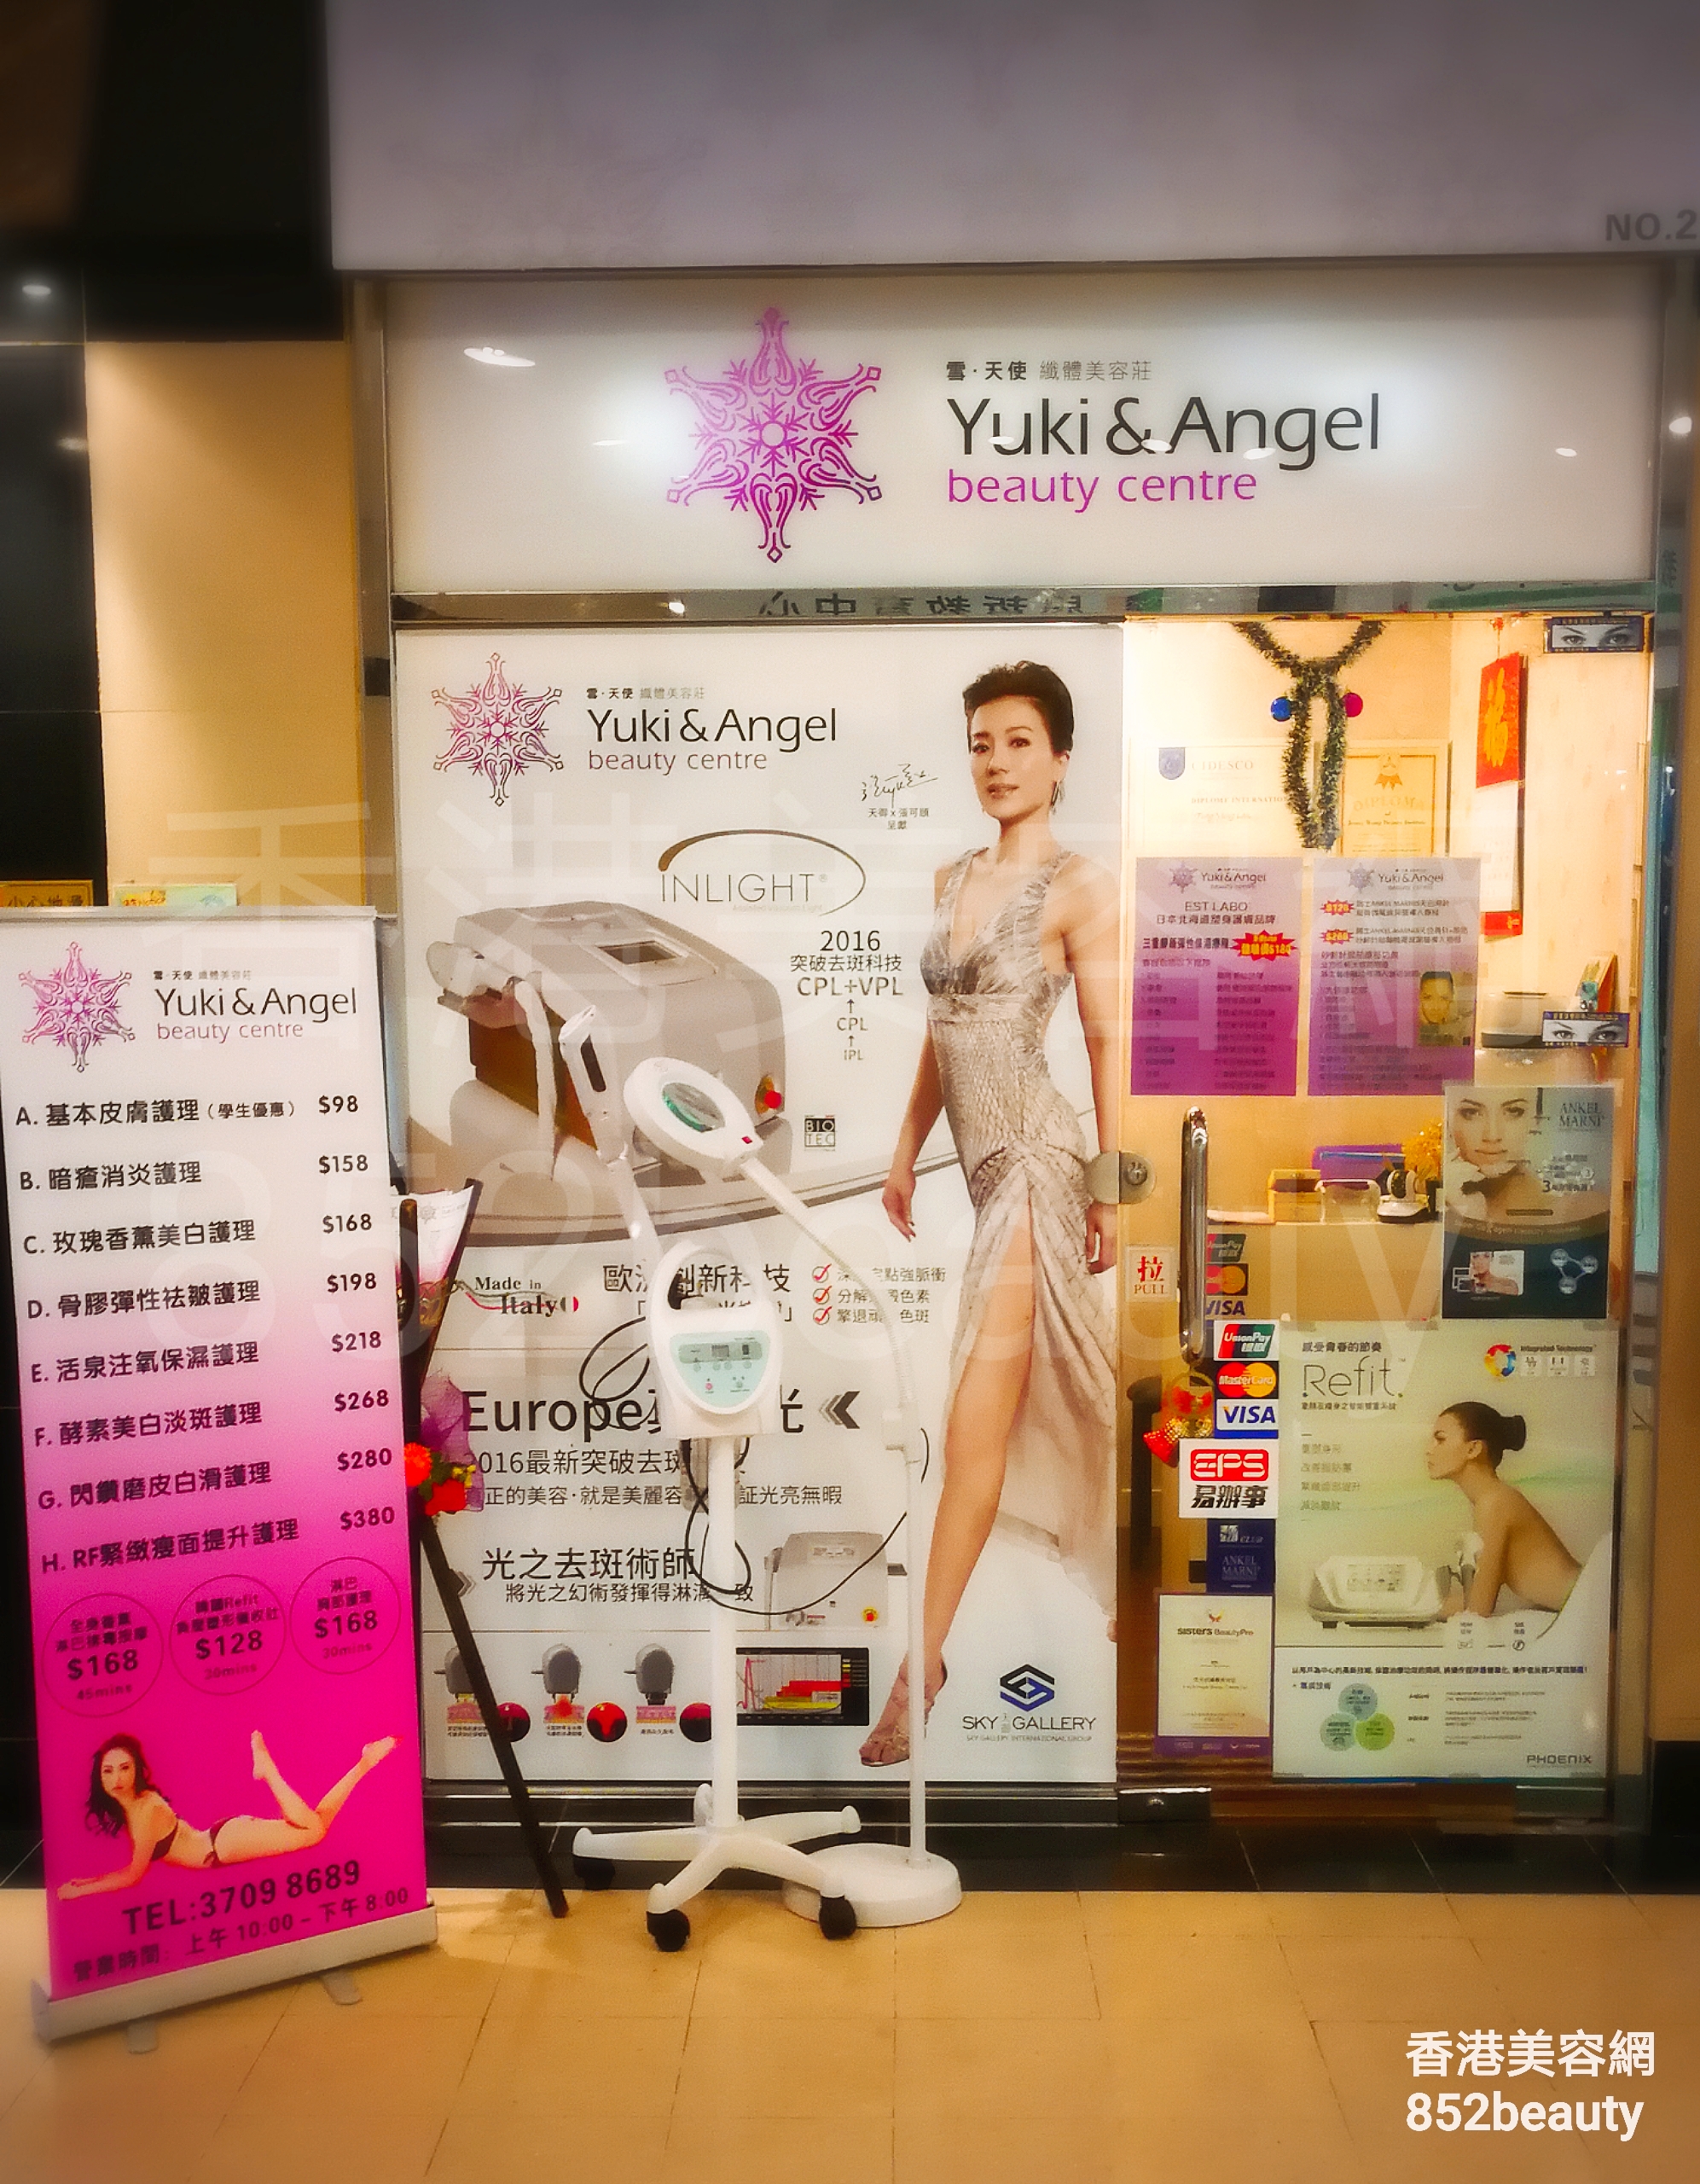 美容院 Beauty Salon: Yuki & Angel beauty centre